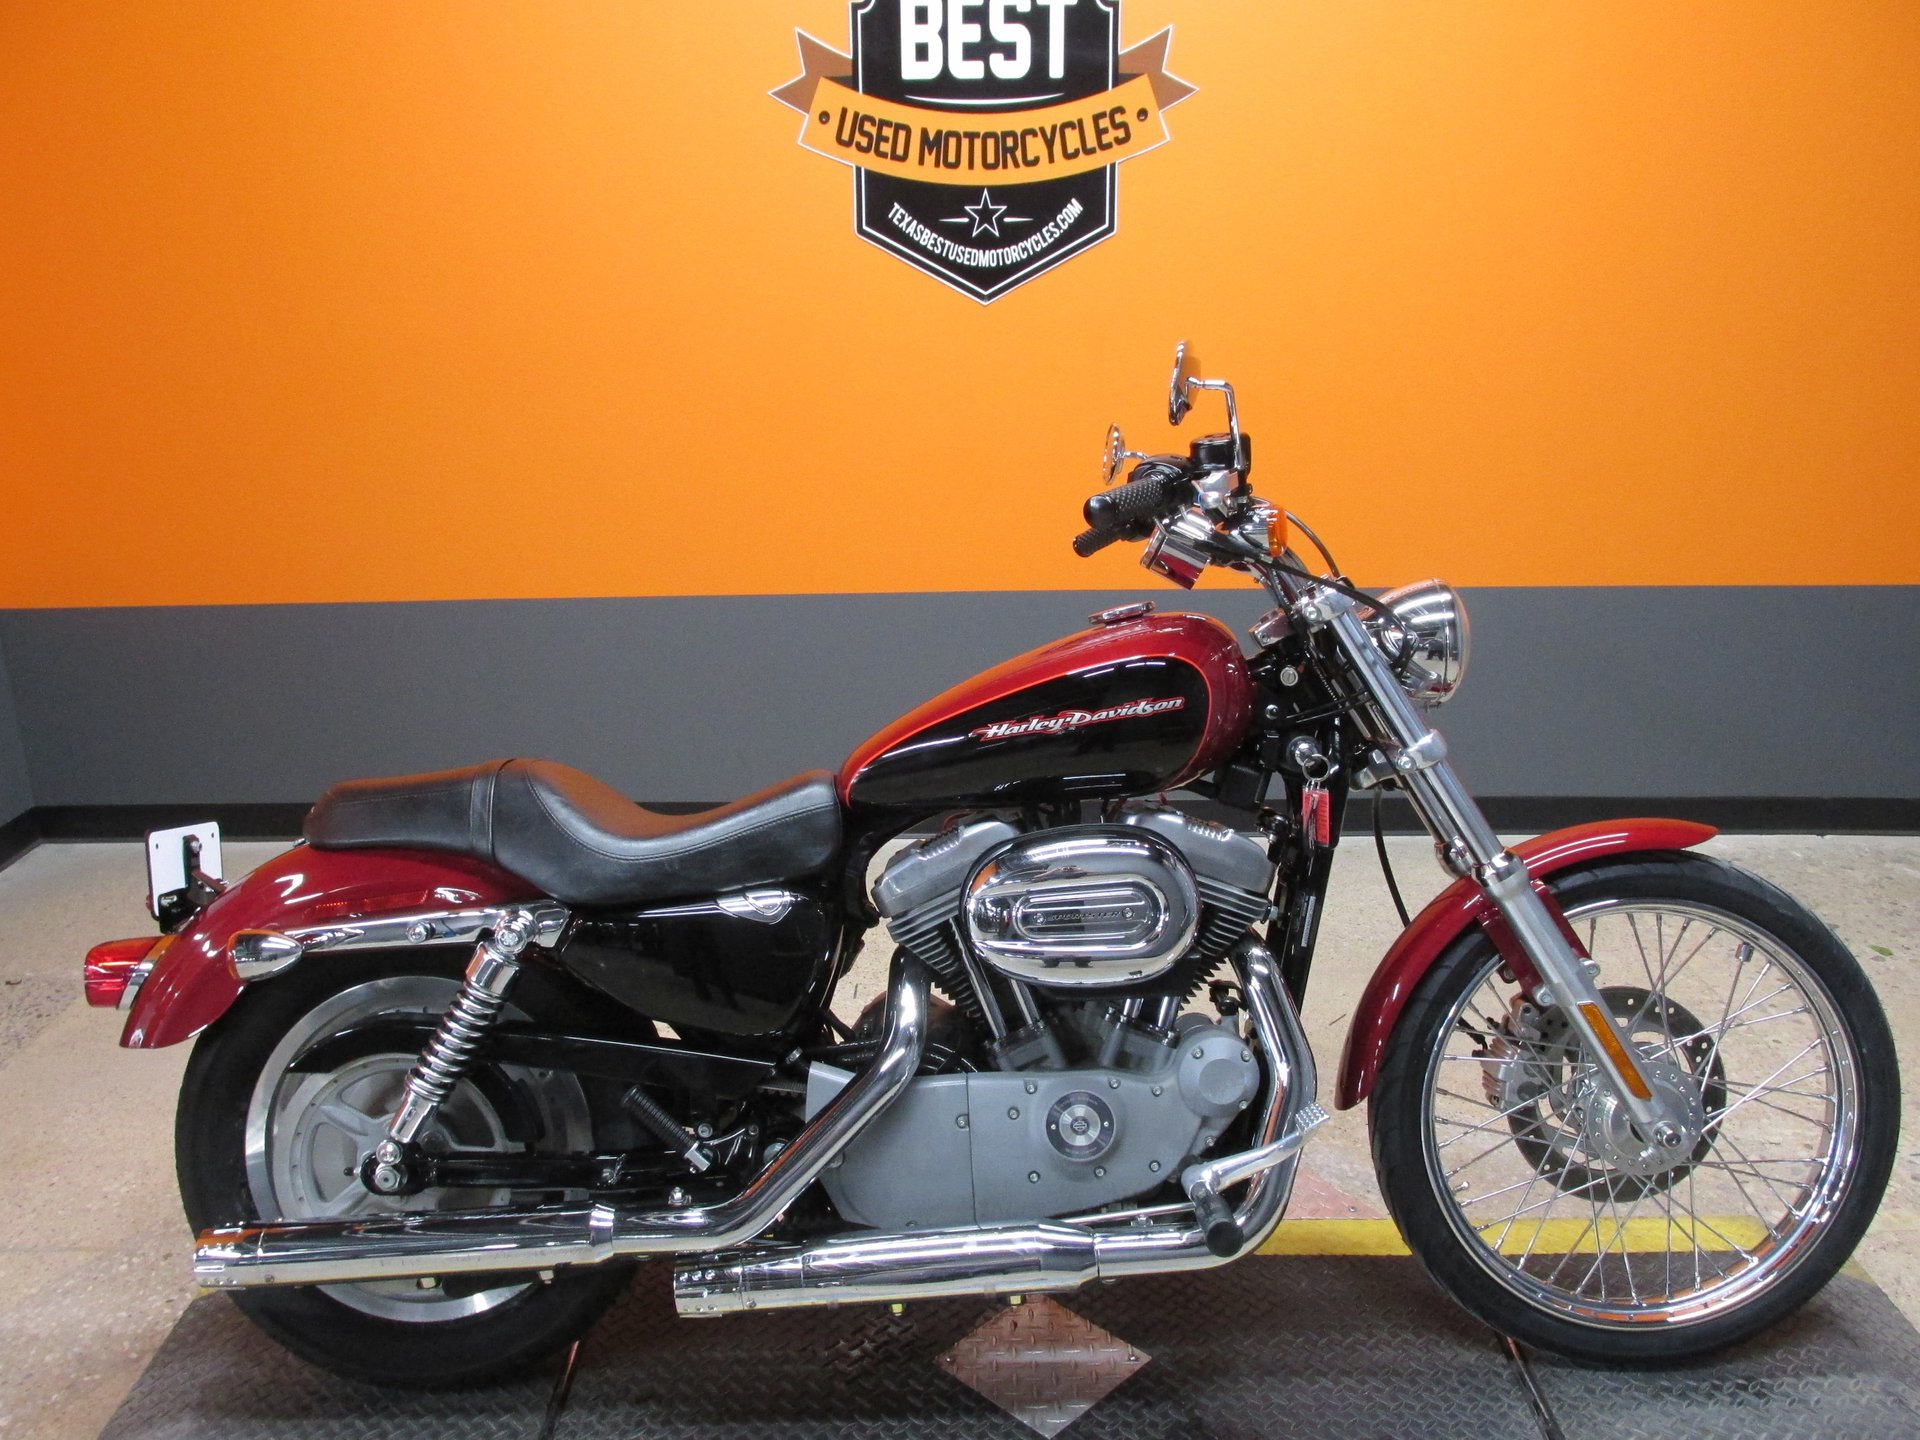 2006 Harley-Davidson Sportster 883 | American Motorcycle Trading Company -  Used Harley Davidson Motorcycles